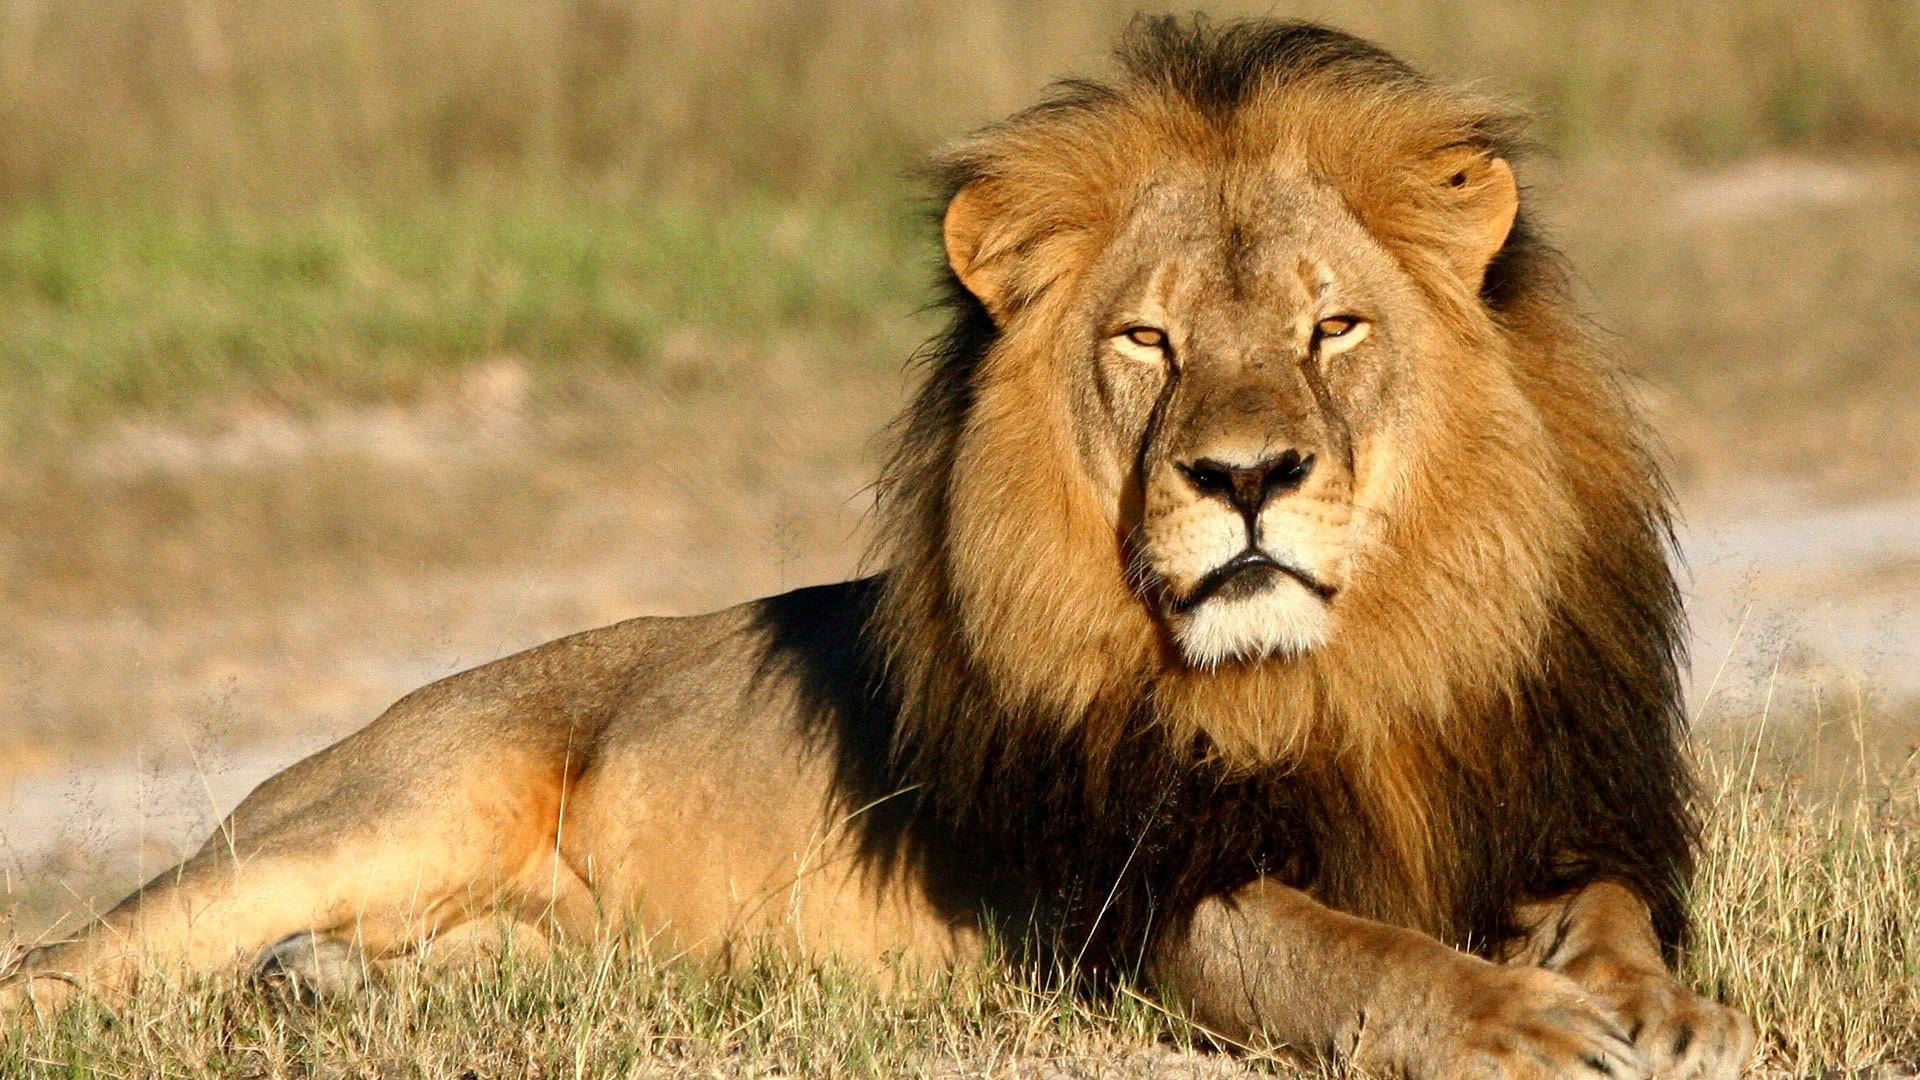 Resting Male Lion Wallpaper